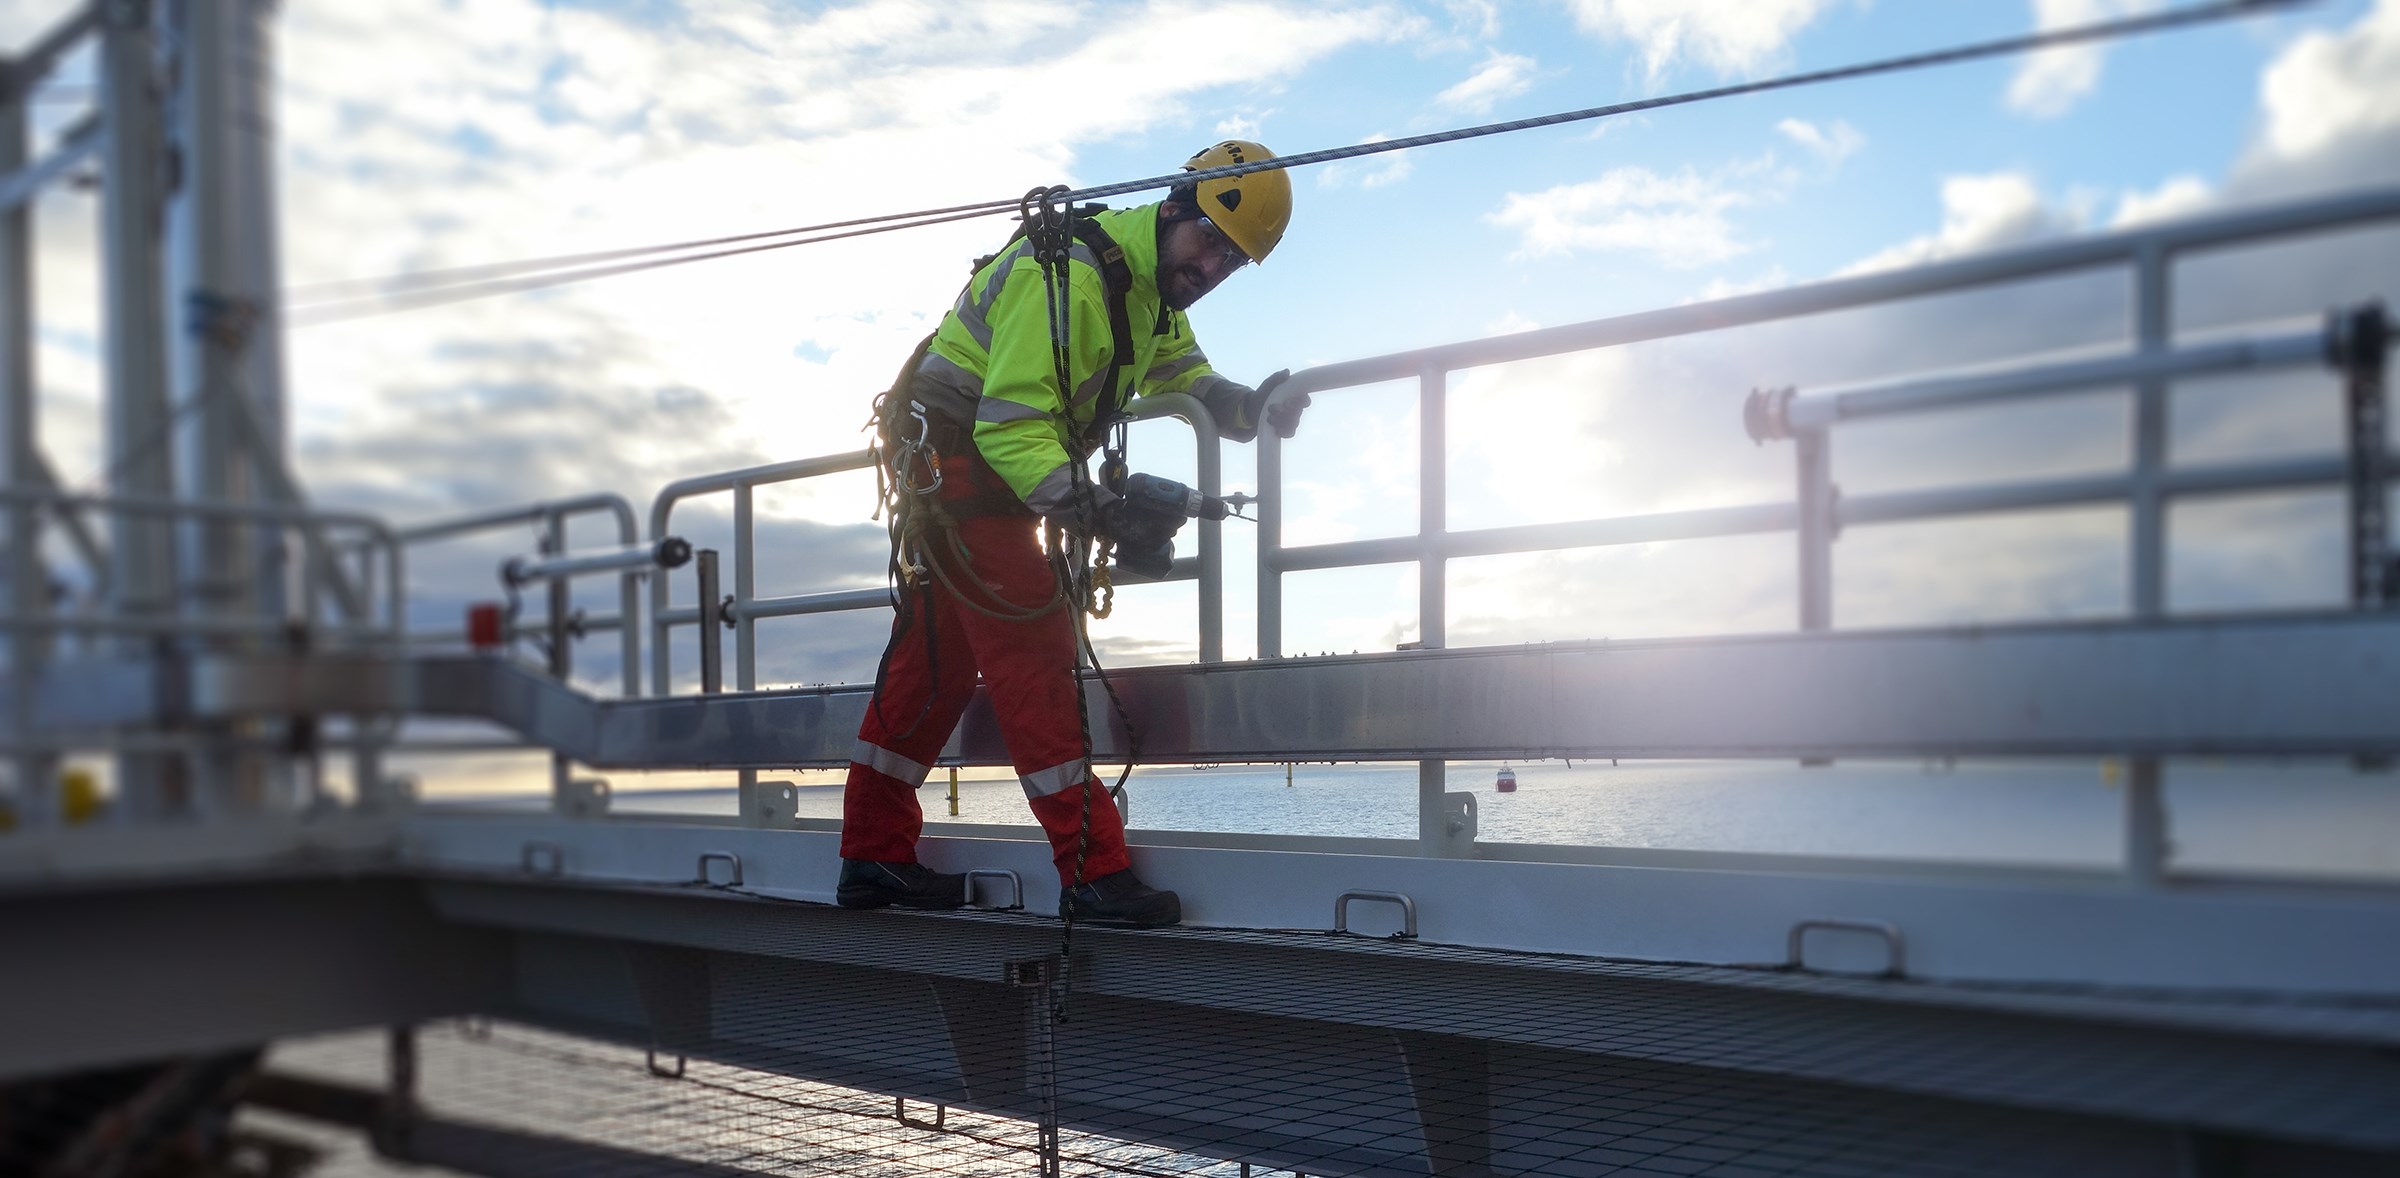 A worker wearing a helmet, neon jacket and orange pants walks across a platform on an offshore oil rig.